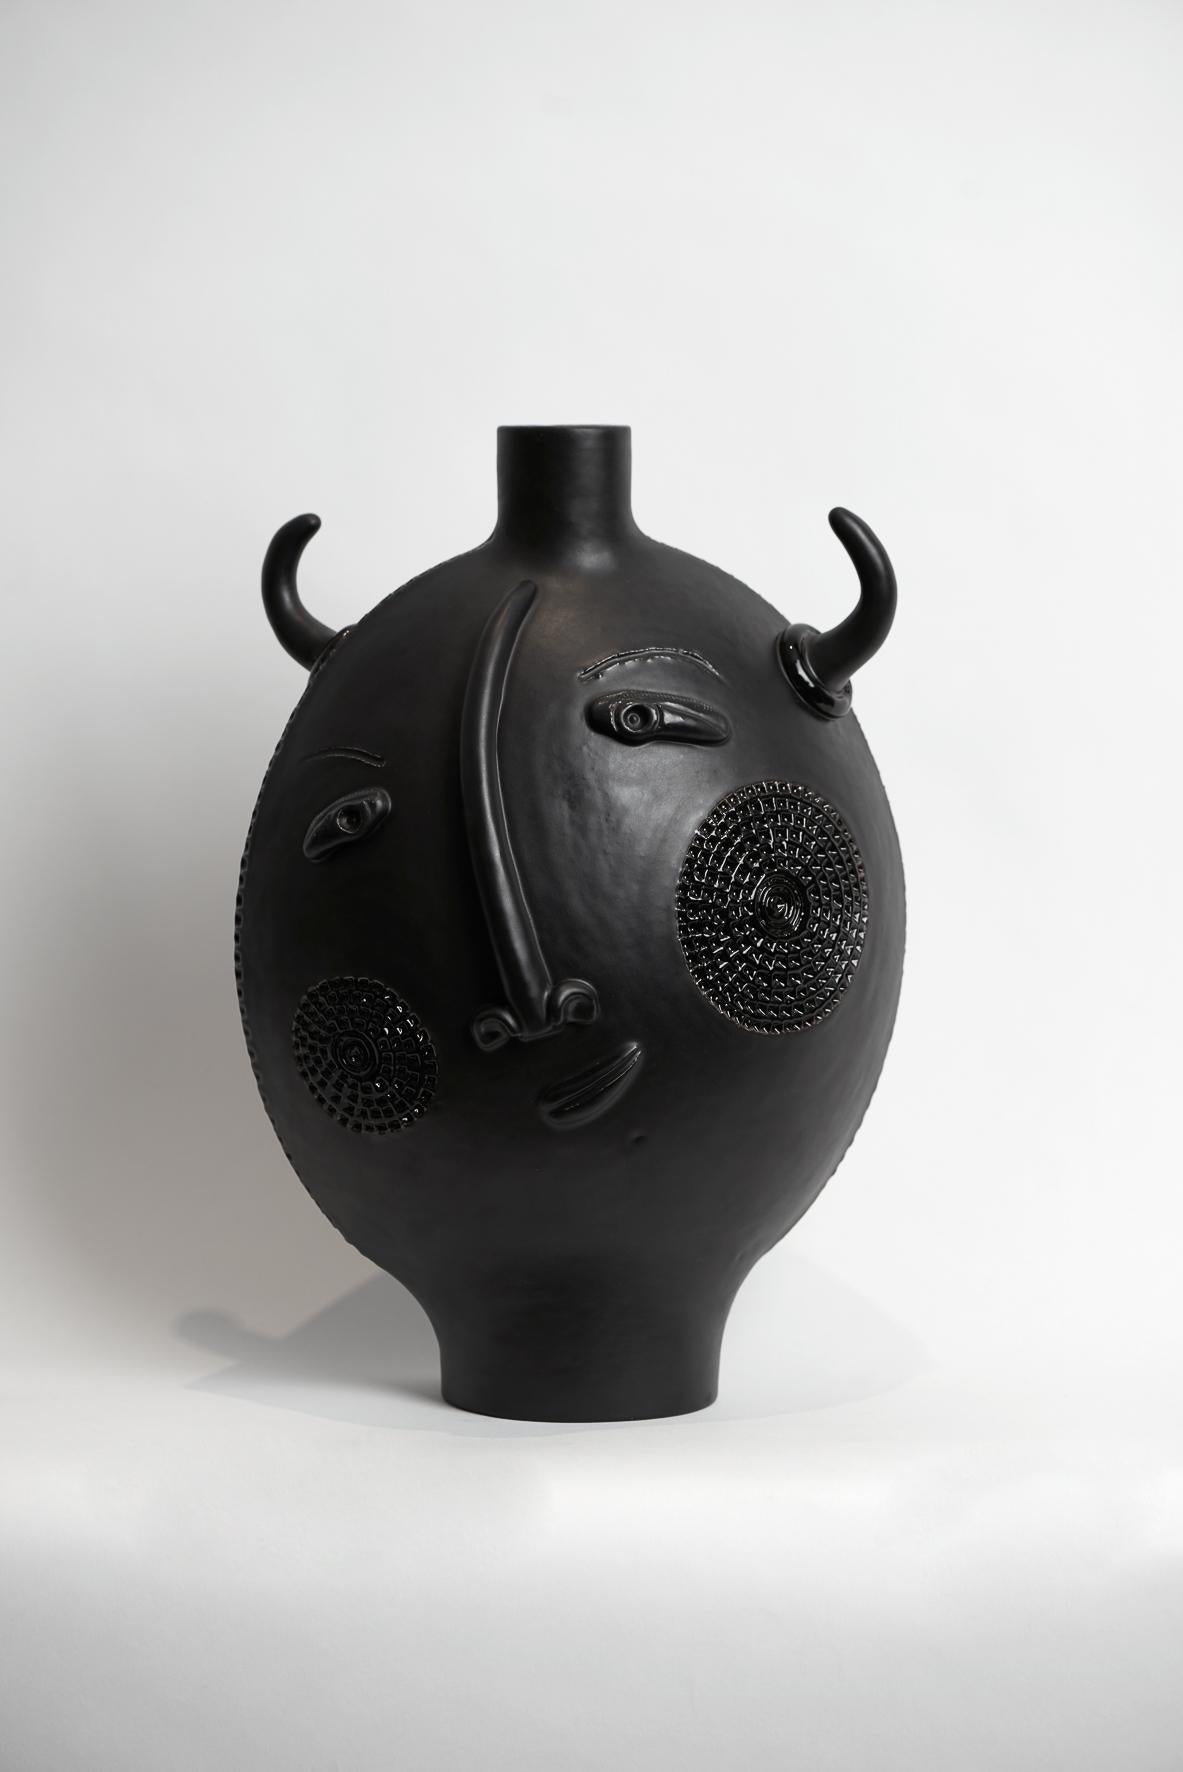 Hand-sculpted ceramic lamp base or sculpture 